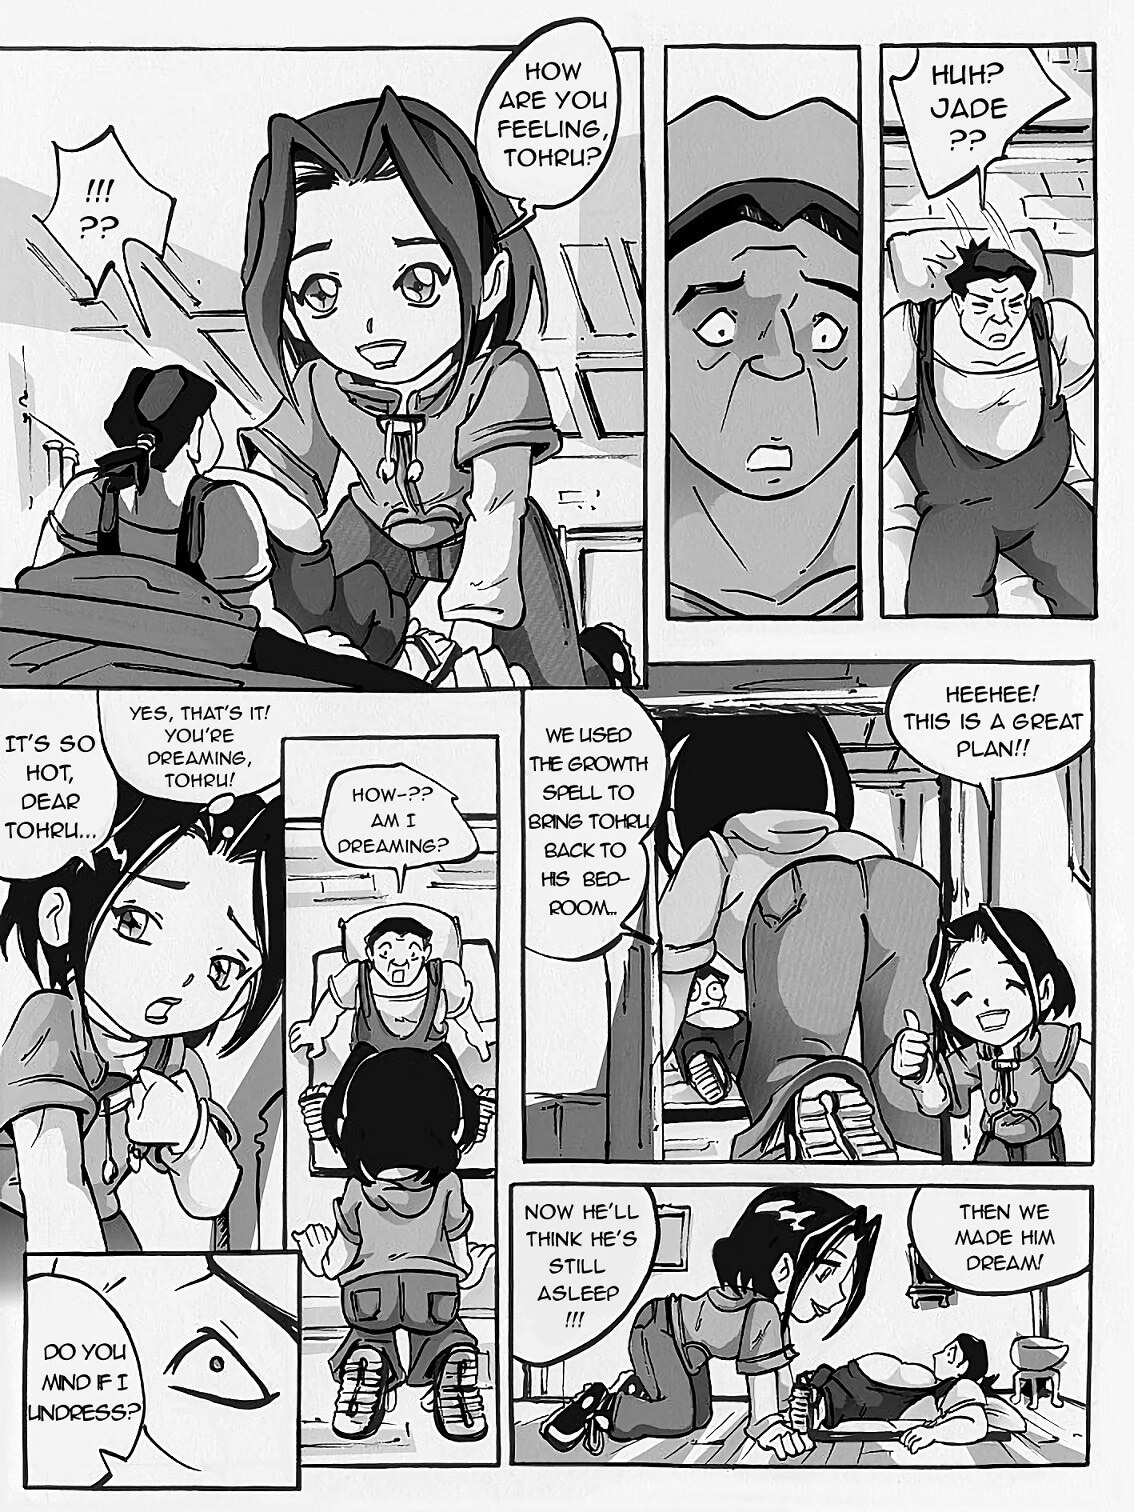 Jade Adventure - Page 32